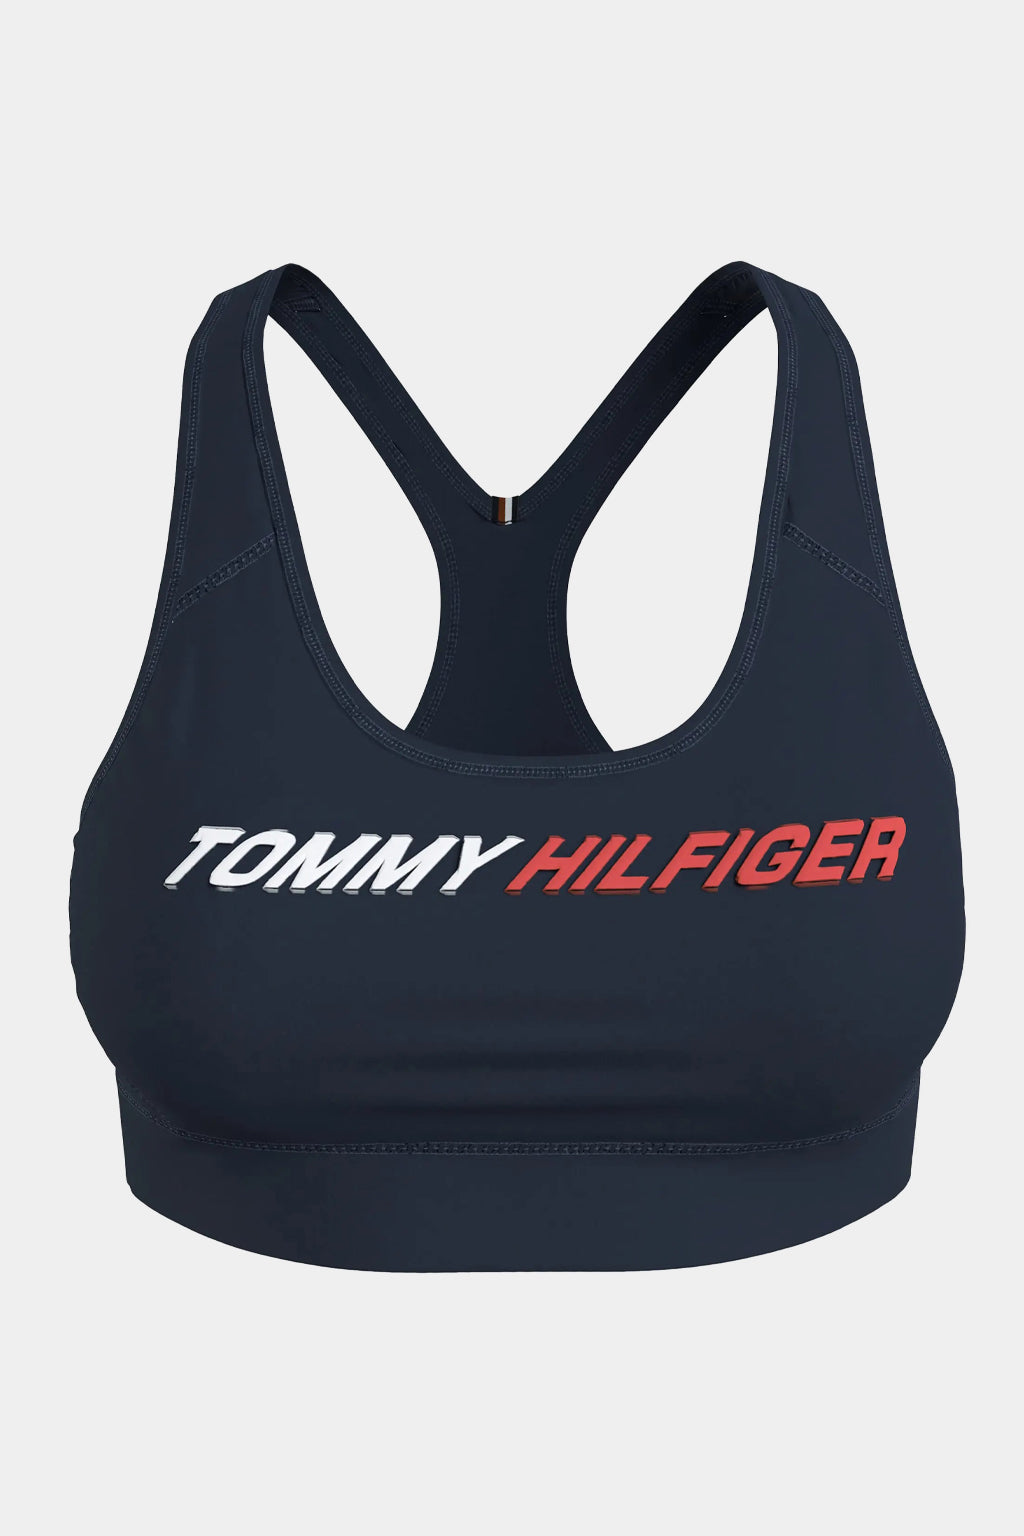 Tommy Hilfiger - Sport Logo Medium Support Bra